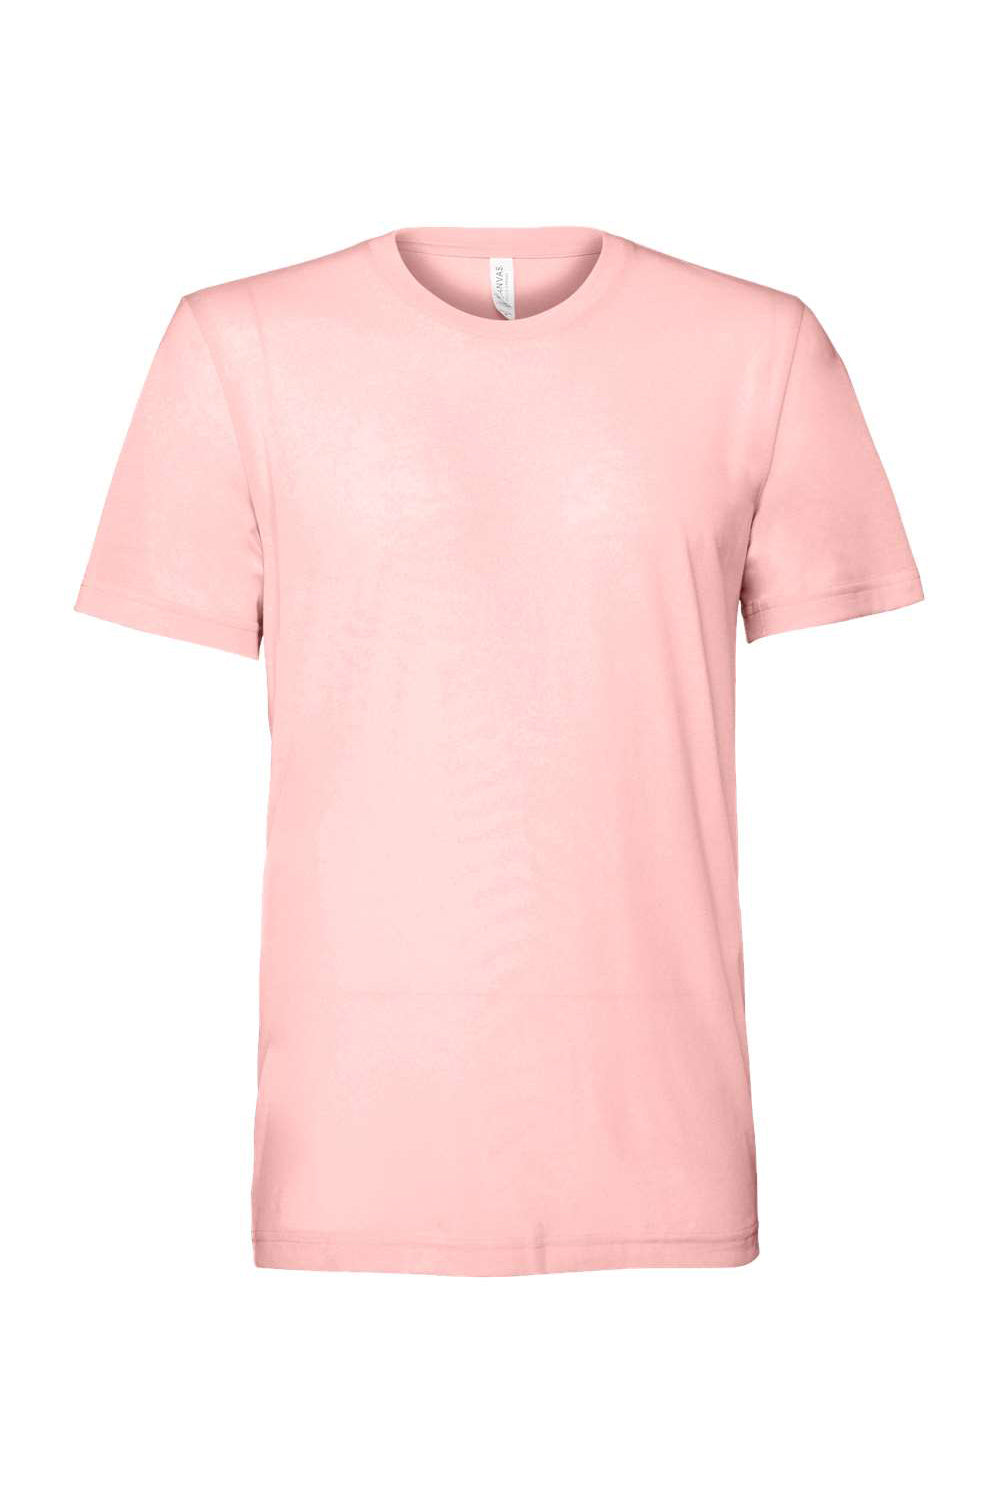 Bella + Canvas BC3413/3413C/3413 Mens Short Sleeve Crewneck T-Shirt Pink Flat Front